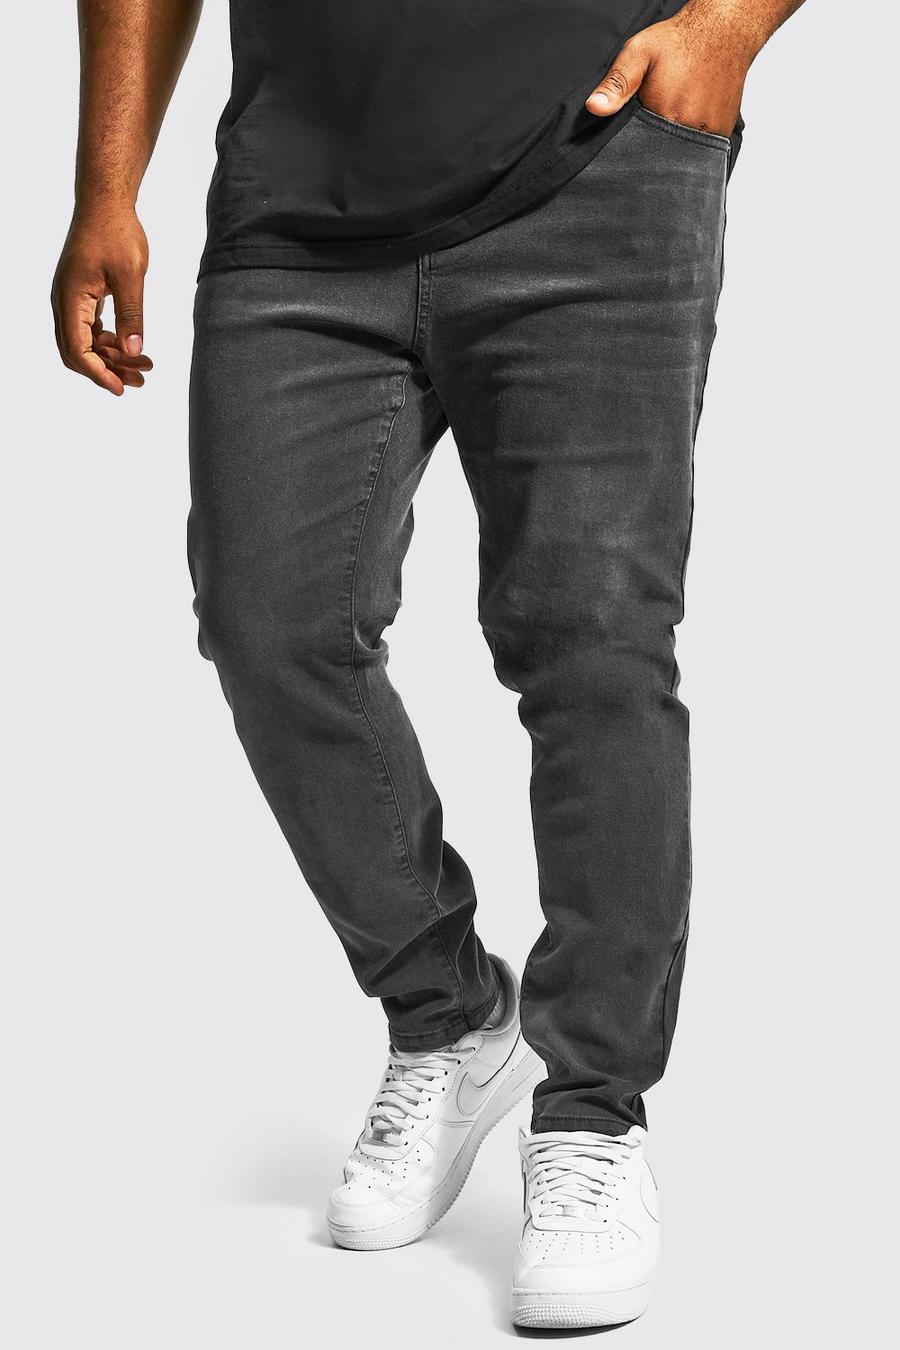 Grande taille - jean skinny en tissu recyclé, Charcoal grey